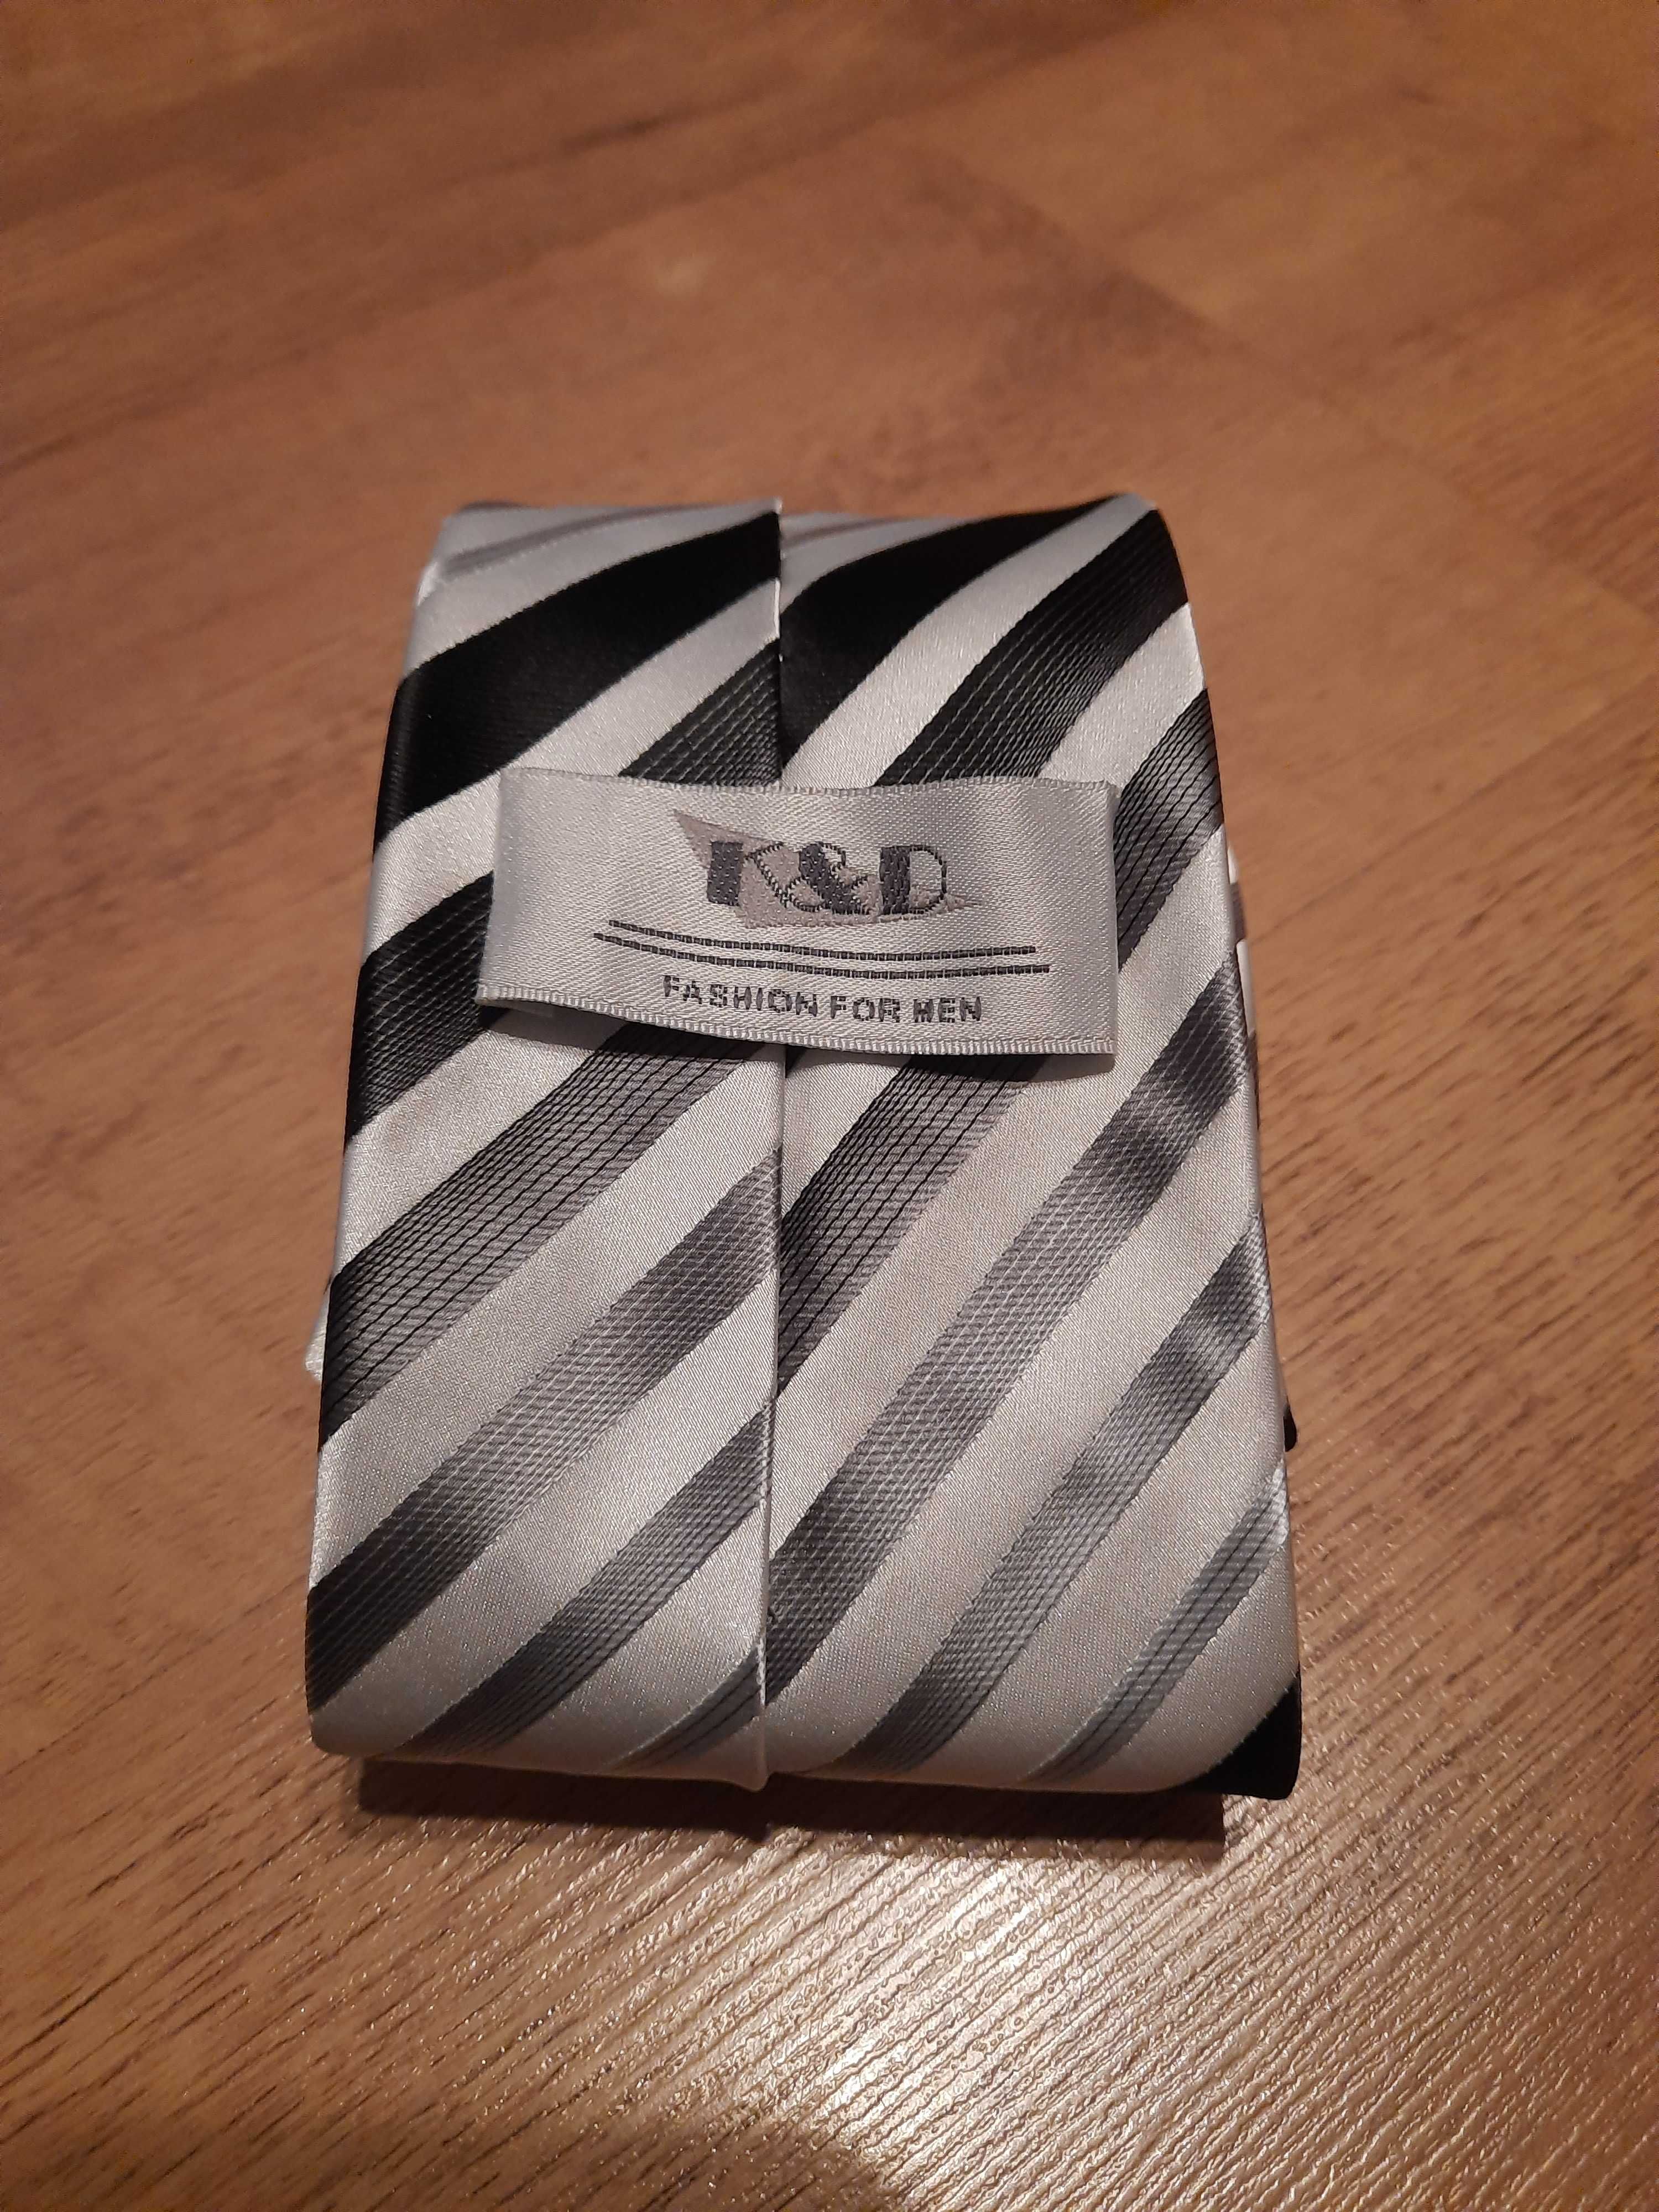 Krawat marki K&D szerokość 9 cm